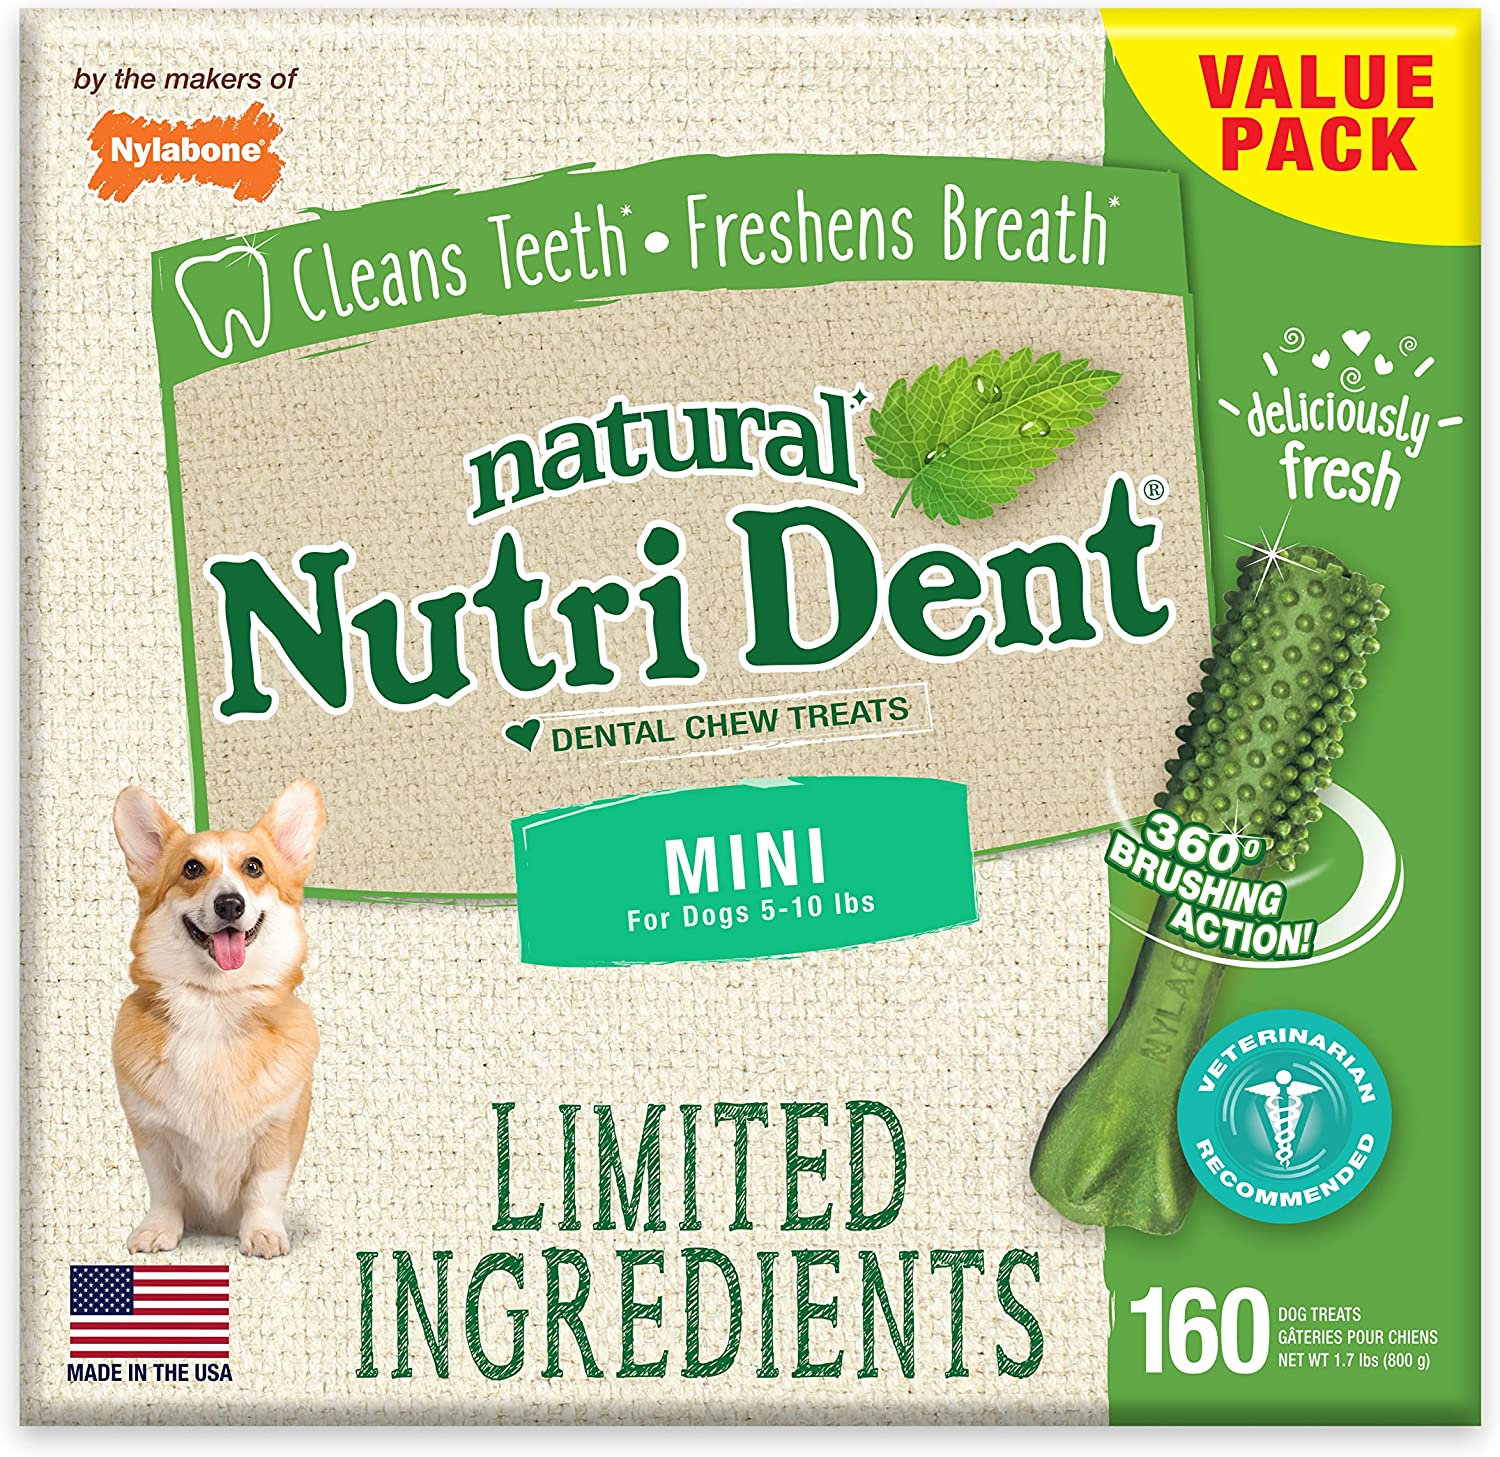 6. Nylabone Nutri Dent Natuurlijke Dental Chews